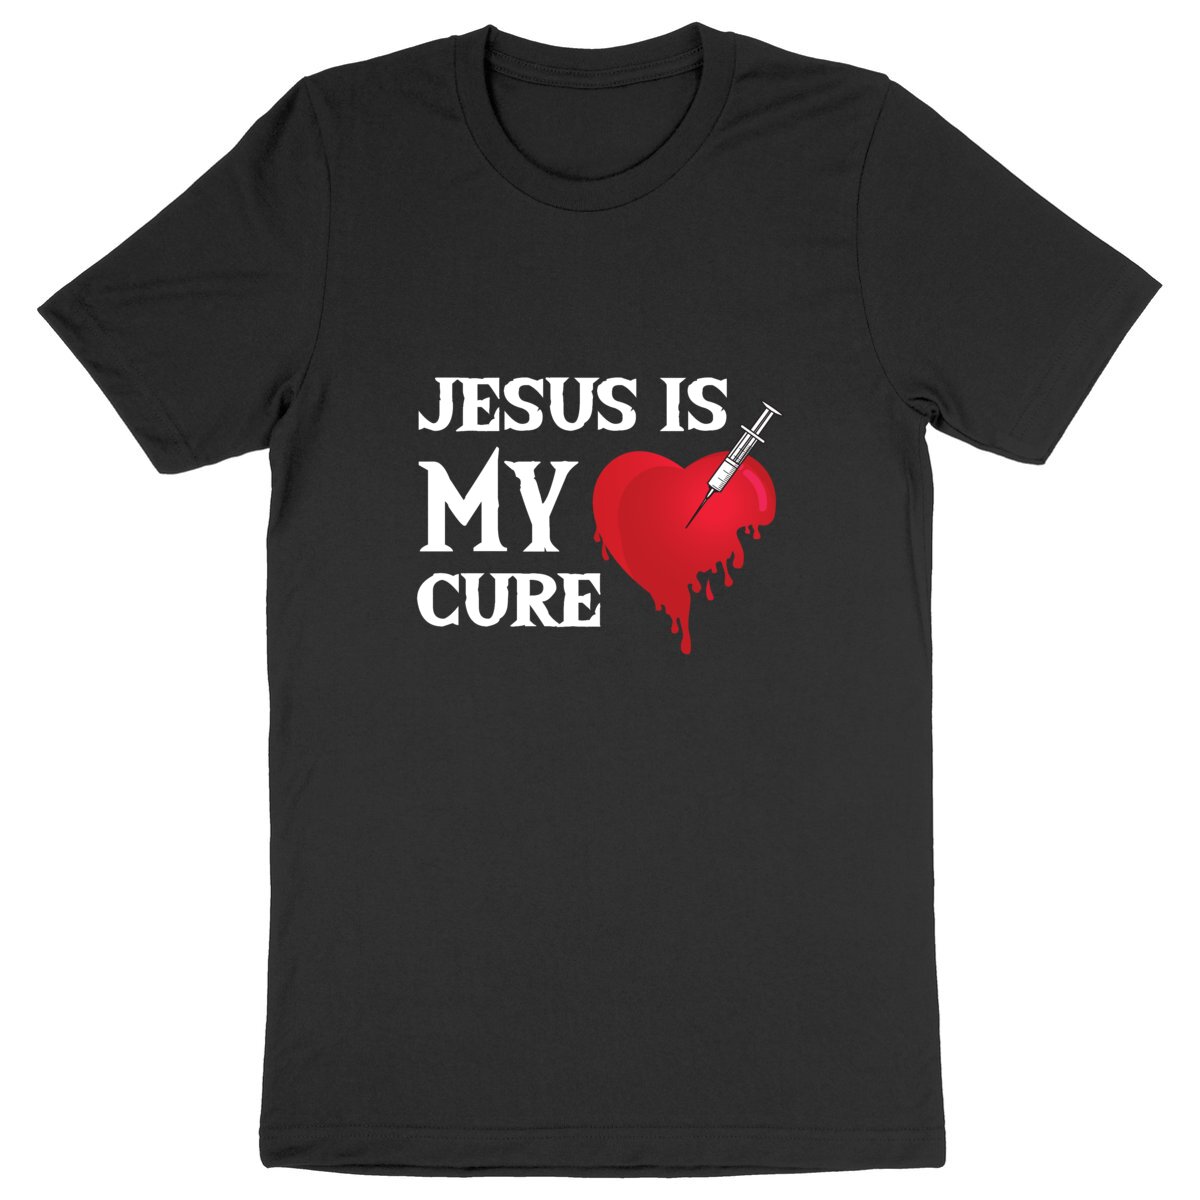 JESUS IS MY CURE ORGANIC T-SHIRT